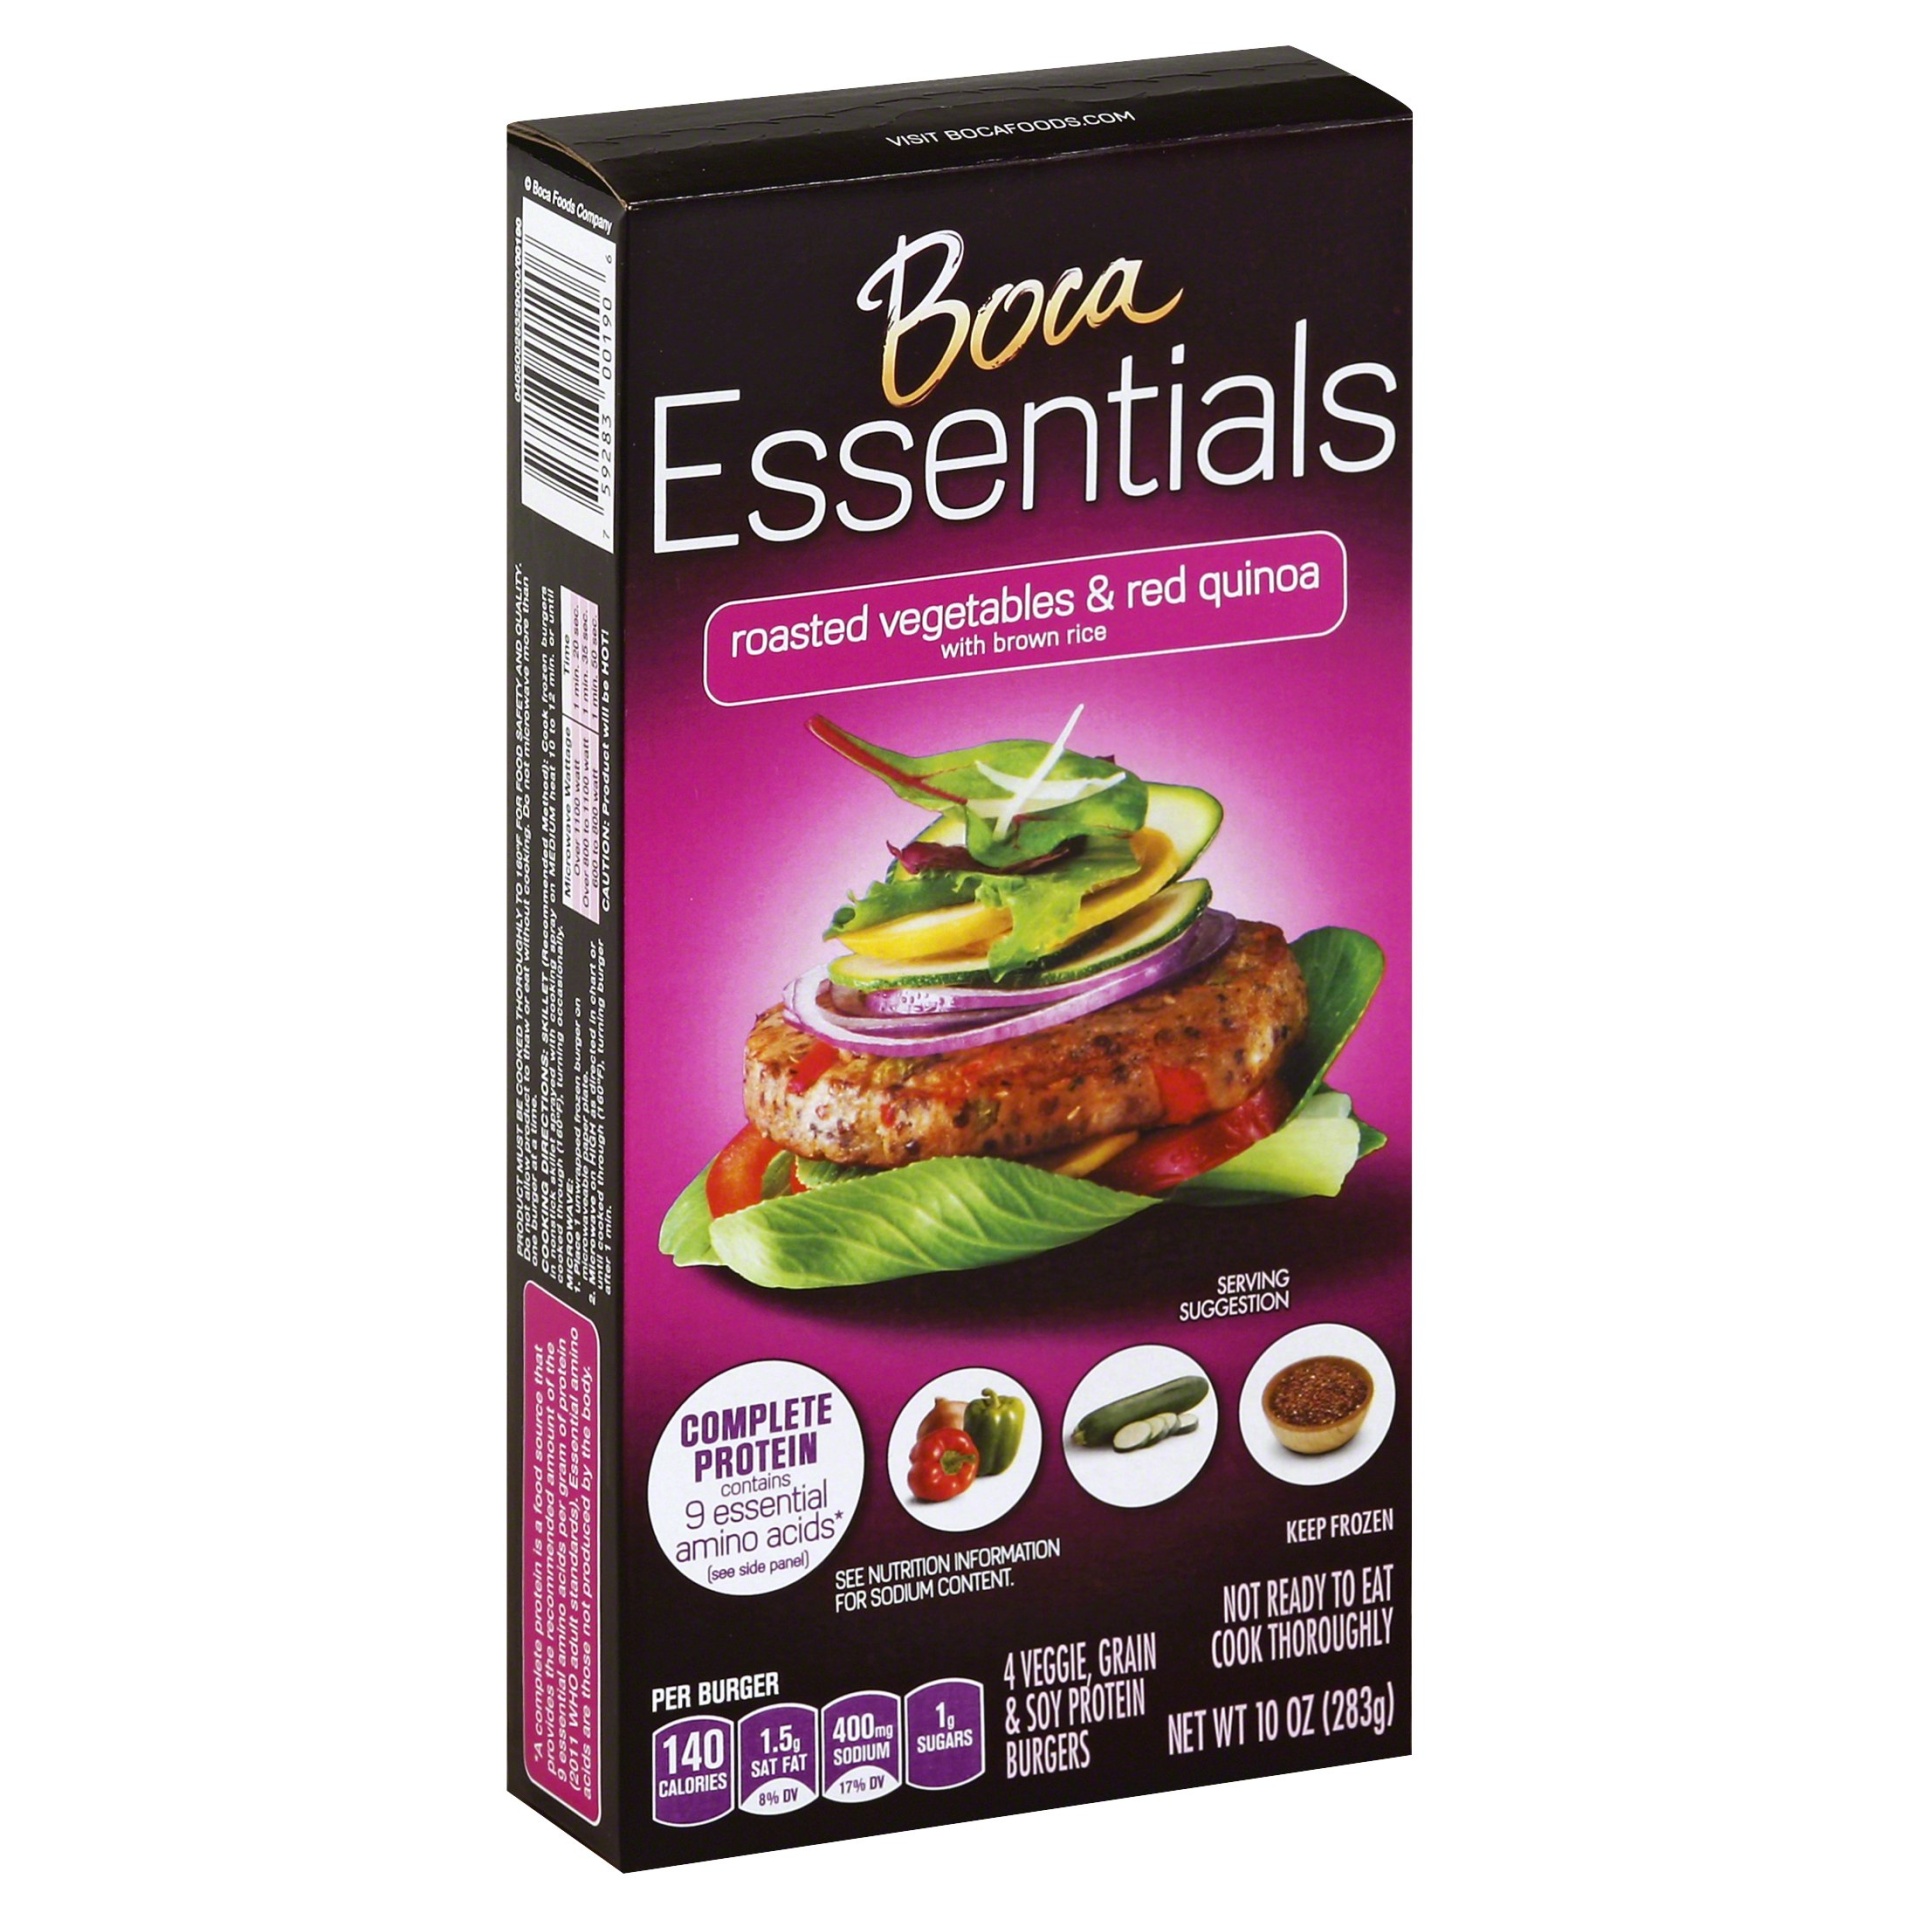 slide 1 of 9, Boca Essentials Roasted Vegetables & Red Quinoa, 10 oz